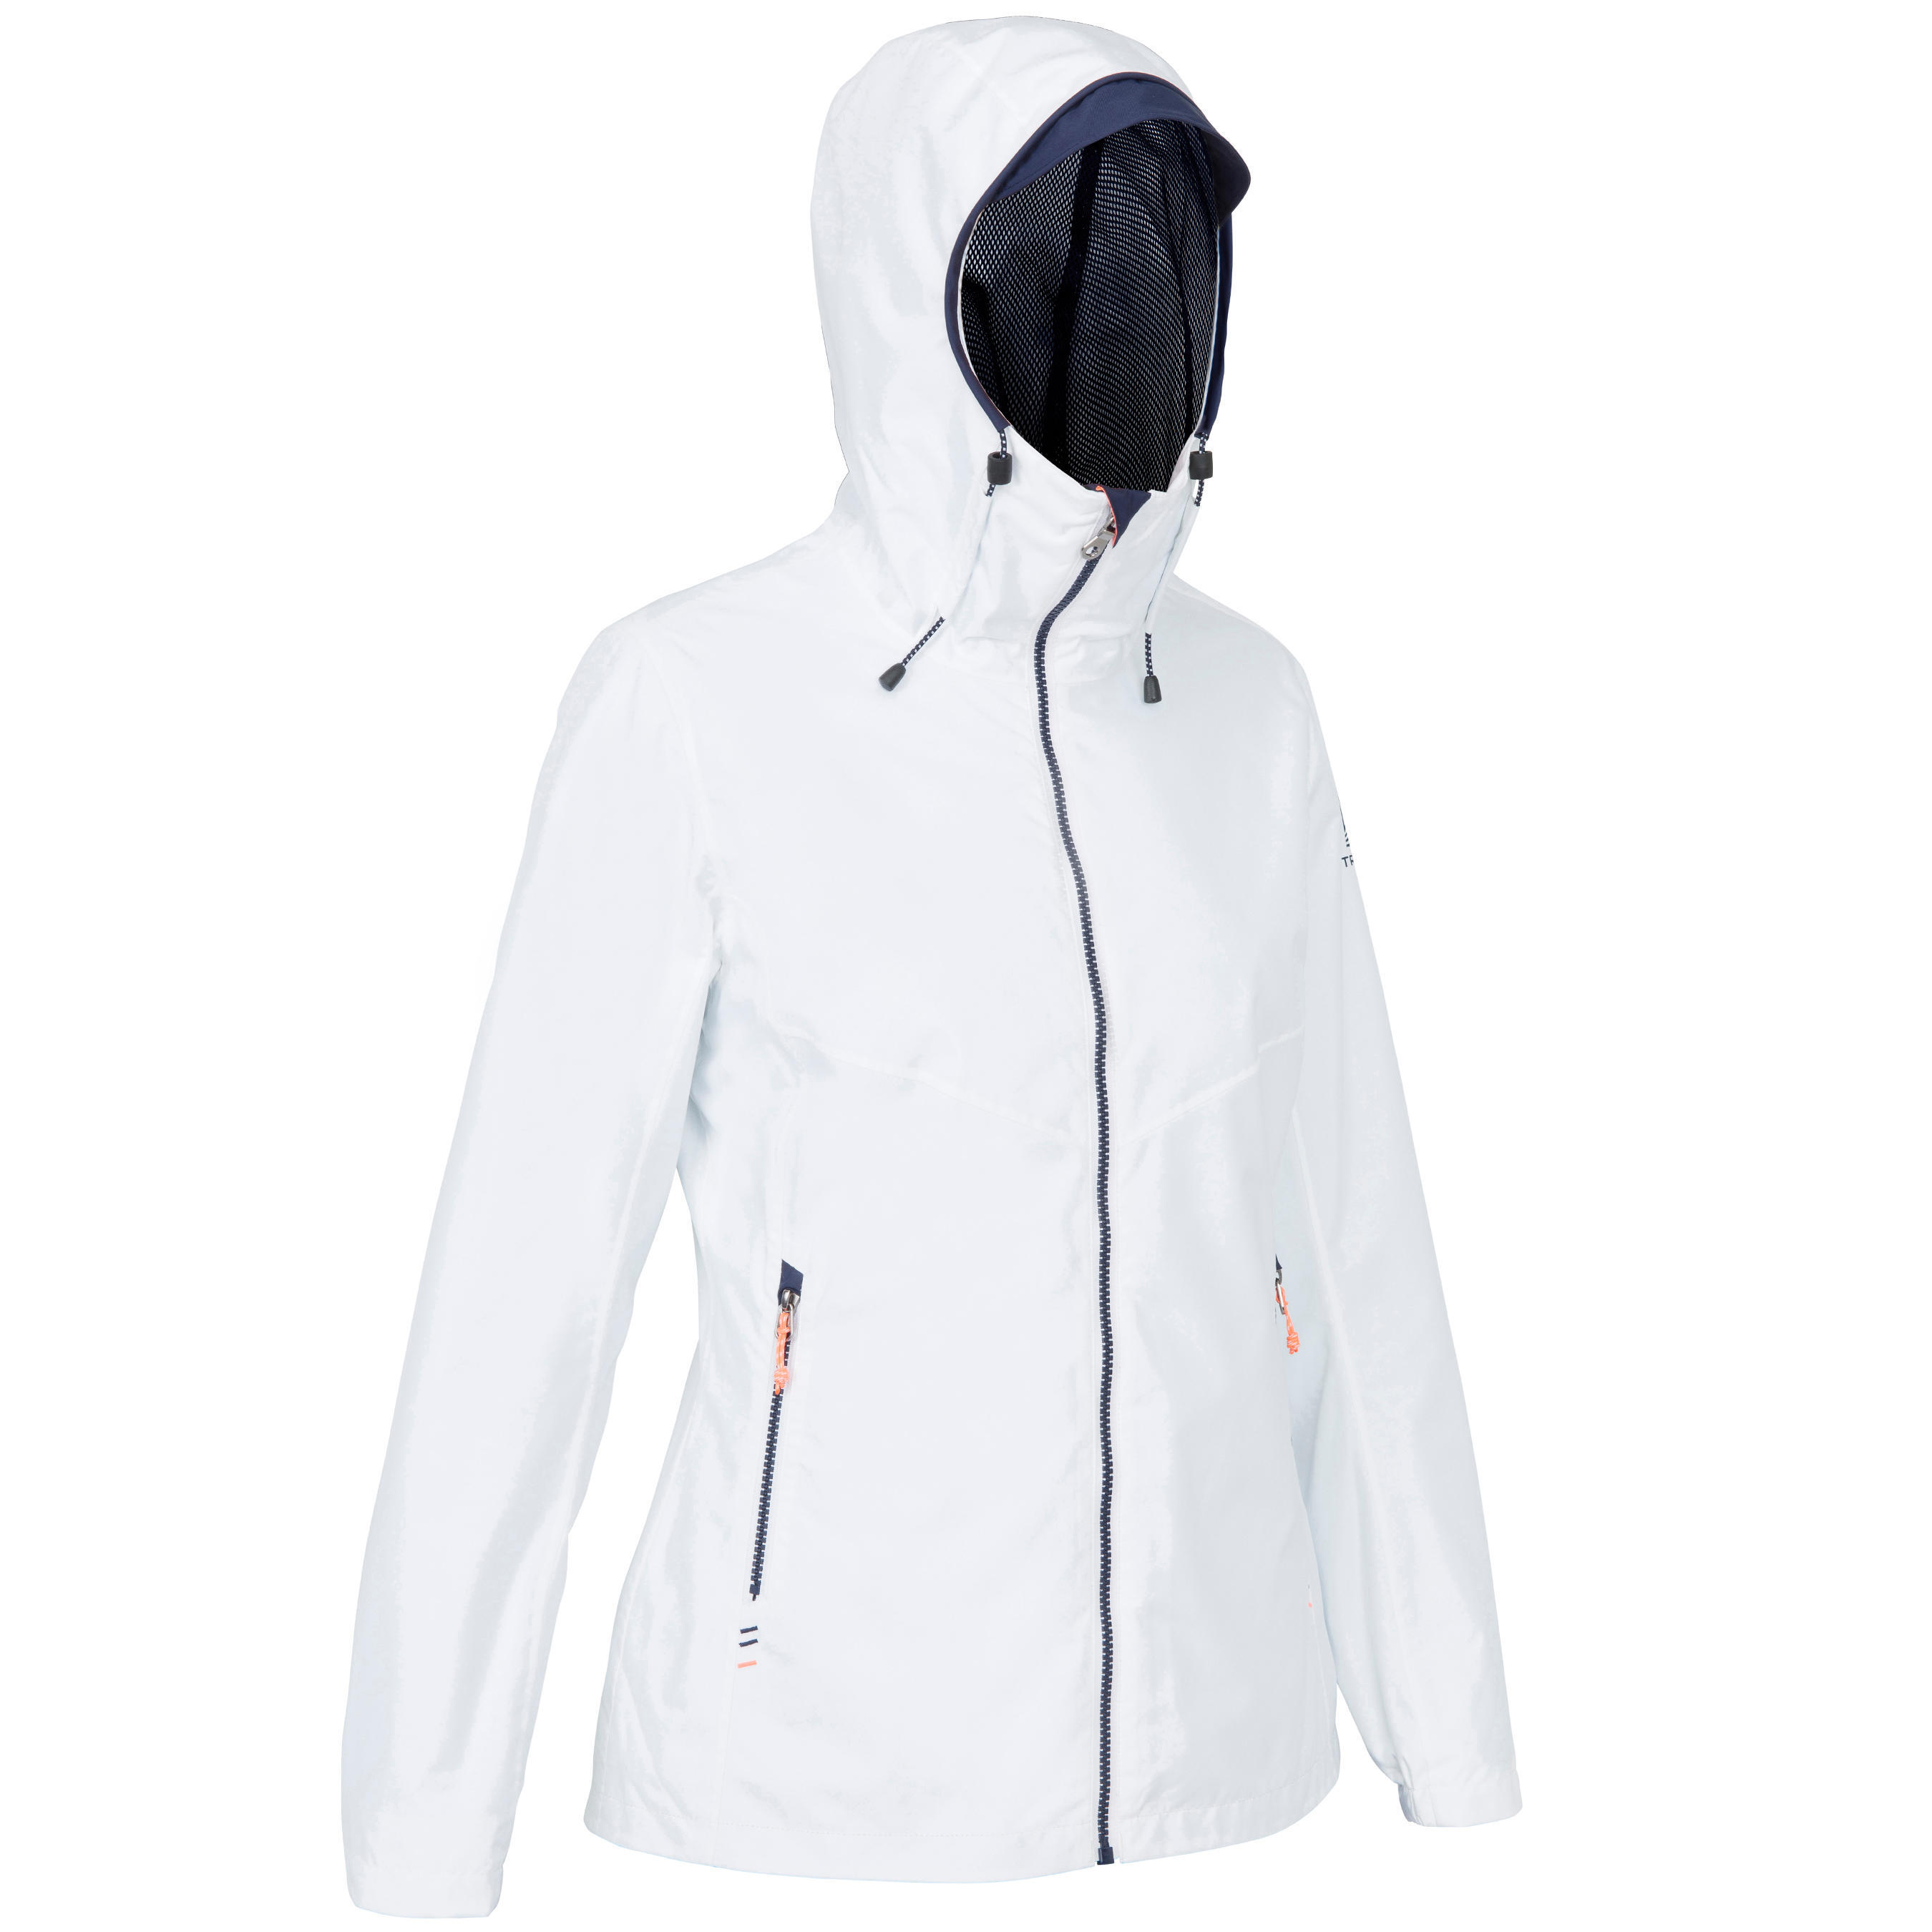 Refurbished Womens waterproof sailing jacket - wet-weather jacket - C Grade 1/7